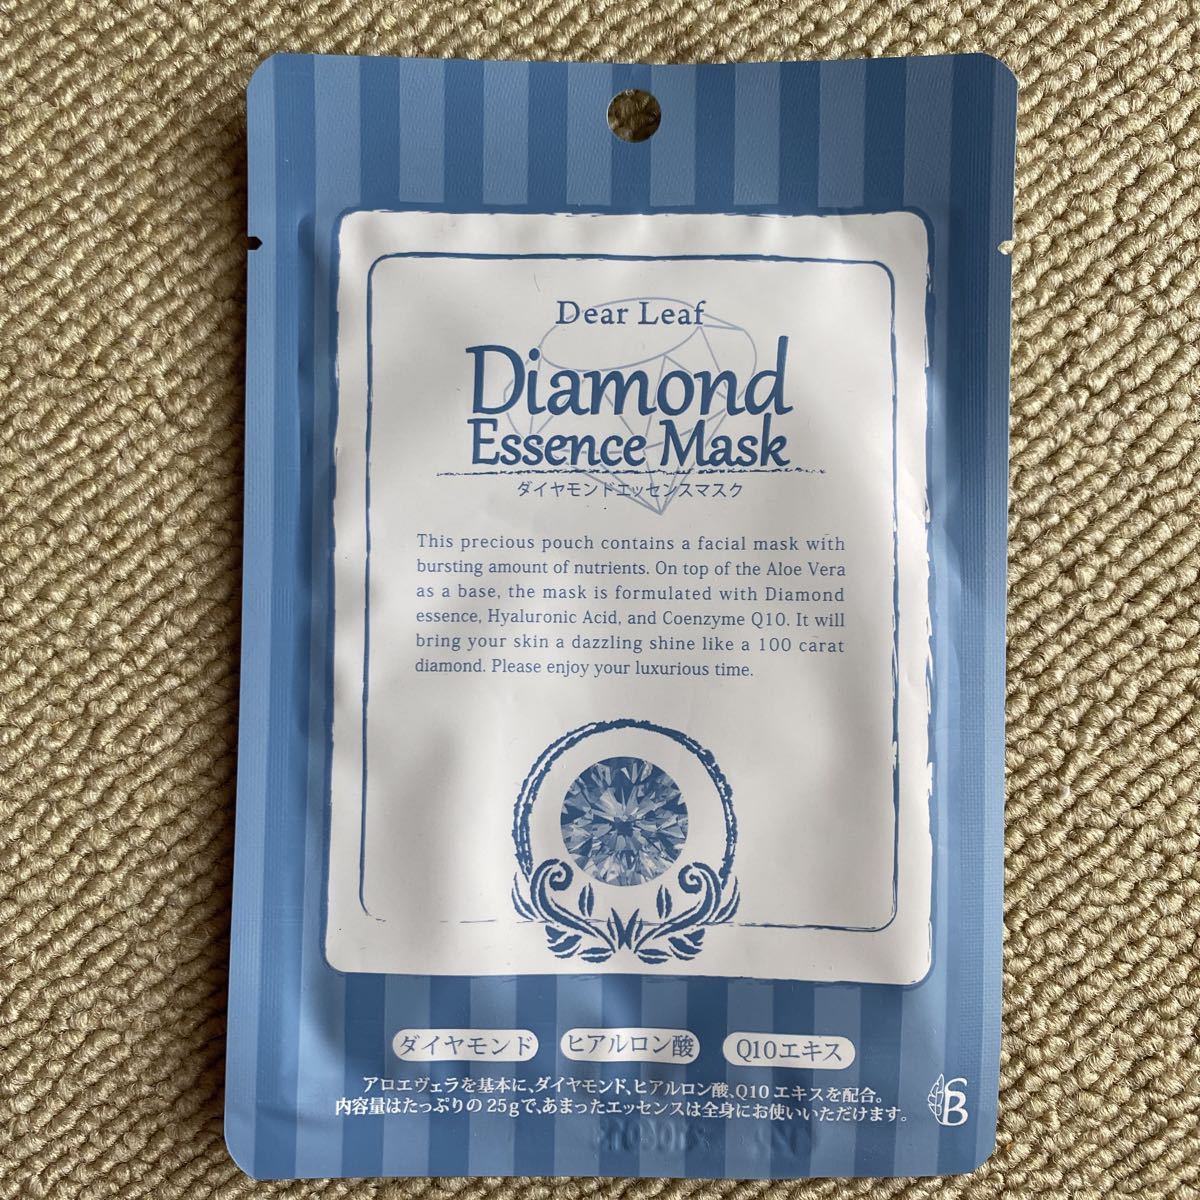  pearl, diamond essence mask 19 sheets + extra 1 sheets .!